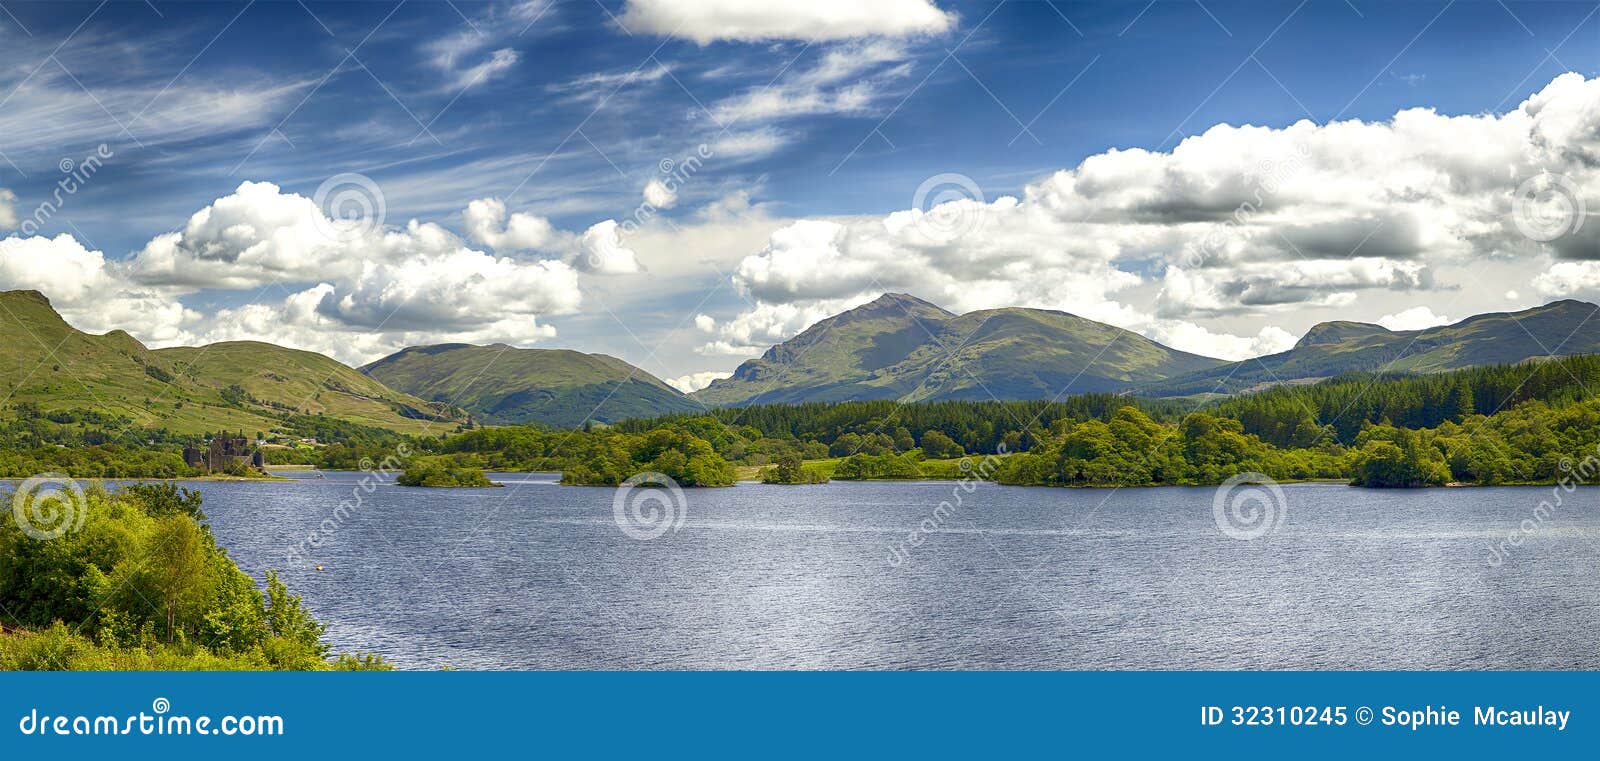 Loch Awe Scotland stock image. Image of kilchurn, highlands - 32310245